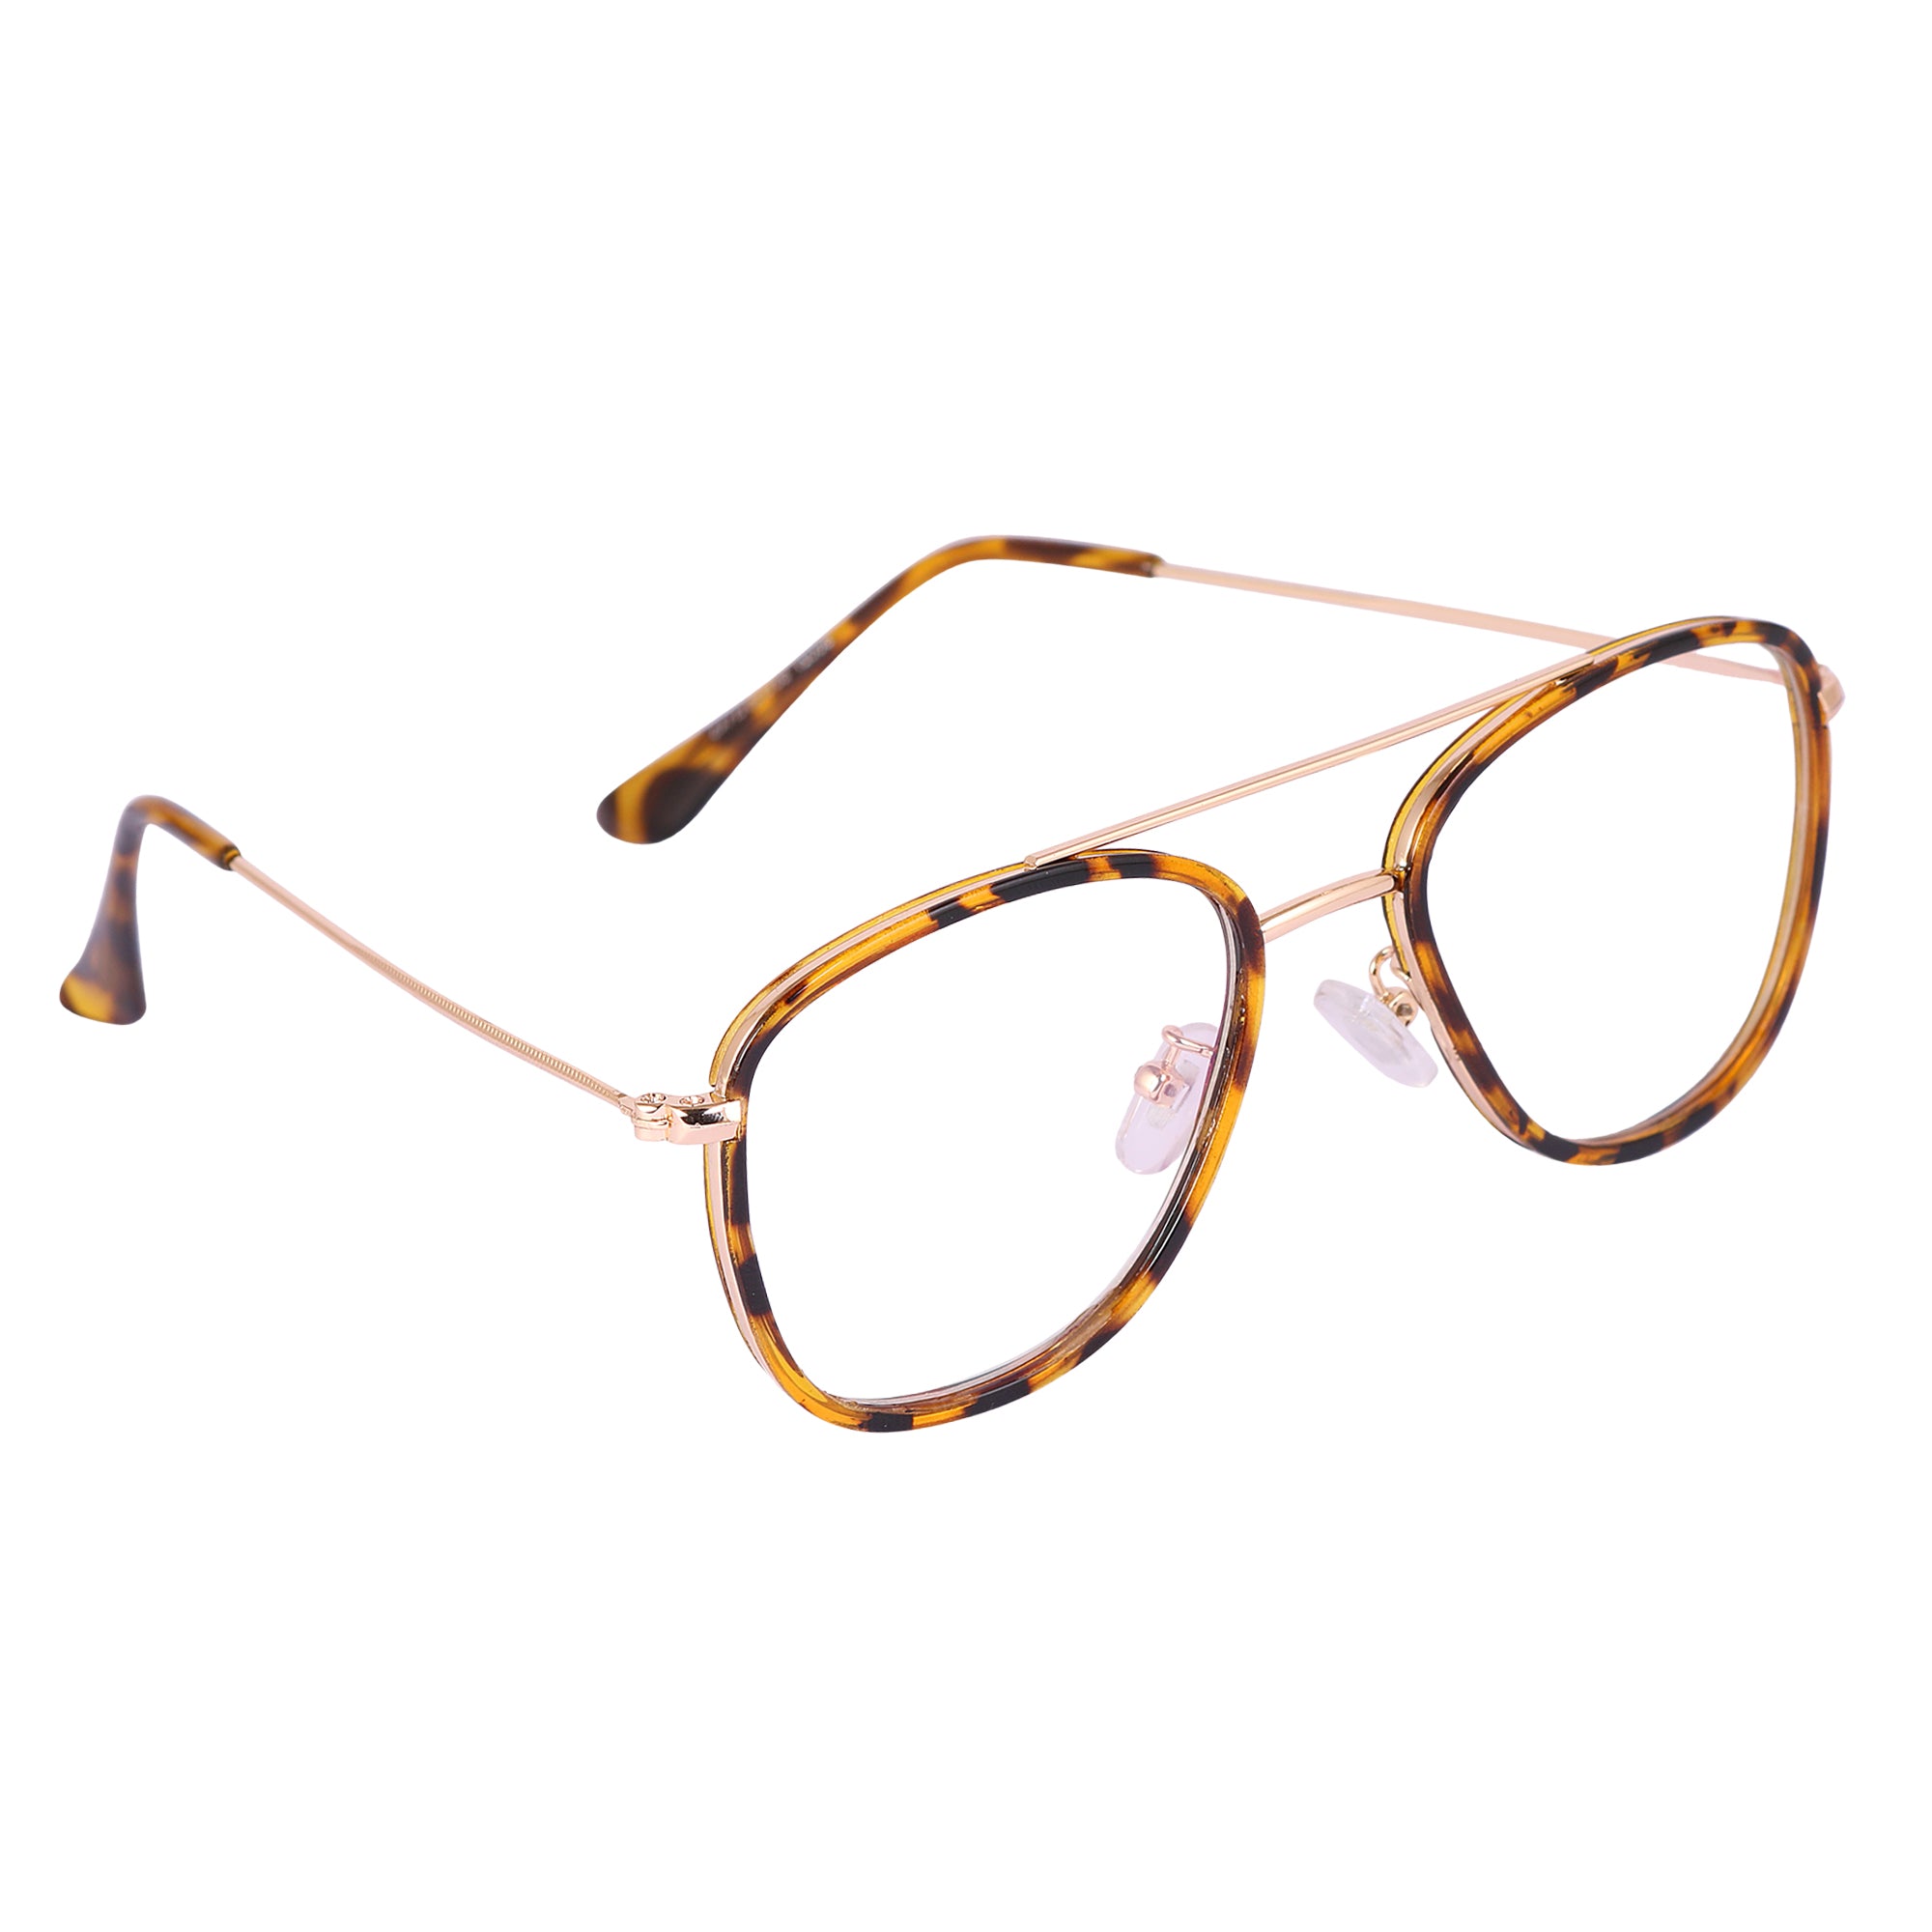 DE MI GOLD Square Metal Eyeglasses - L98027